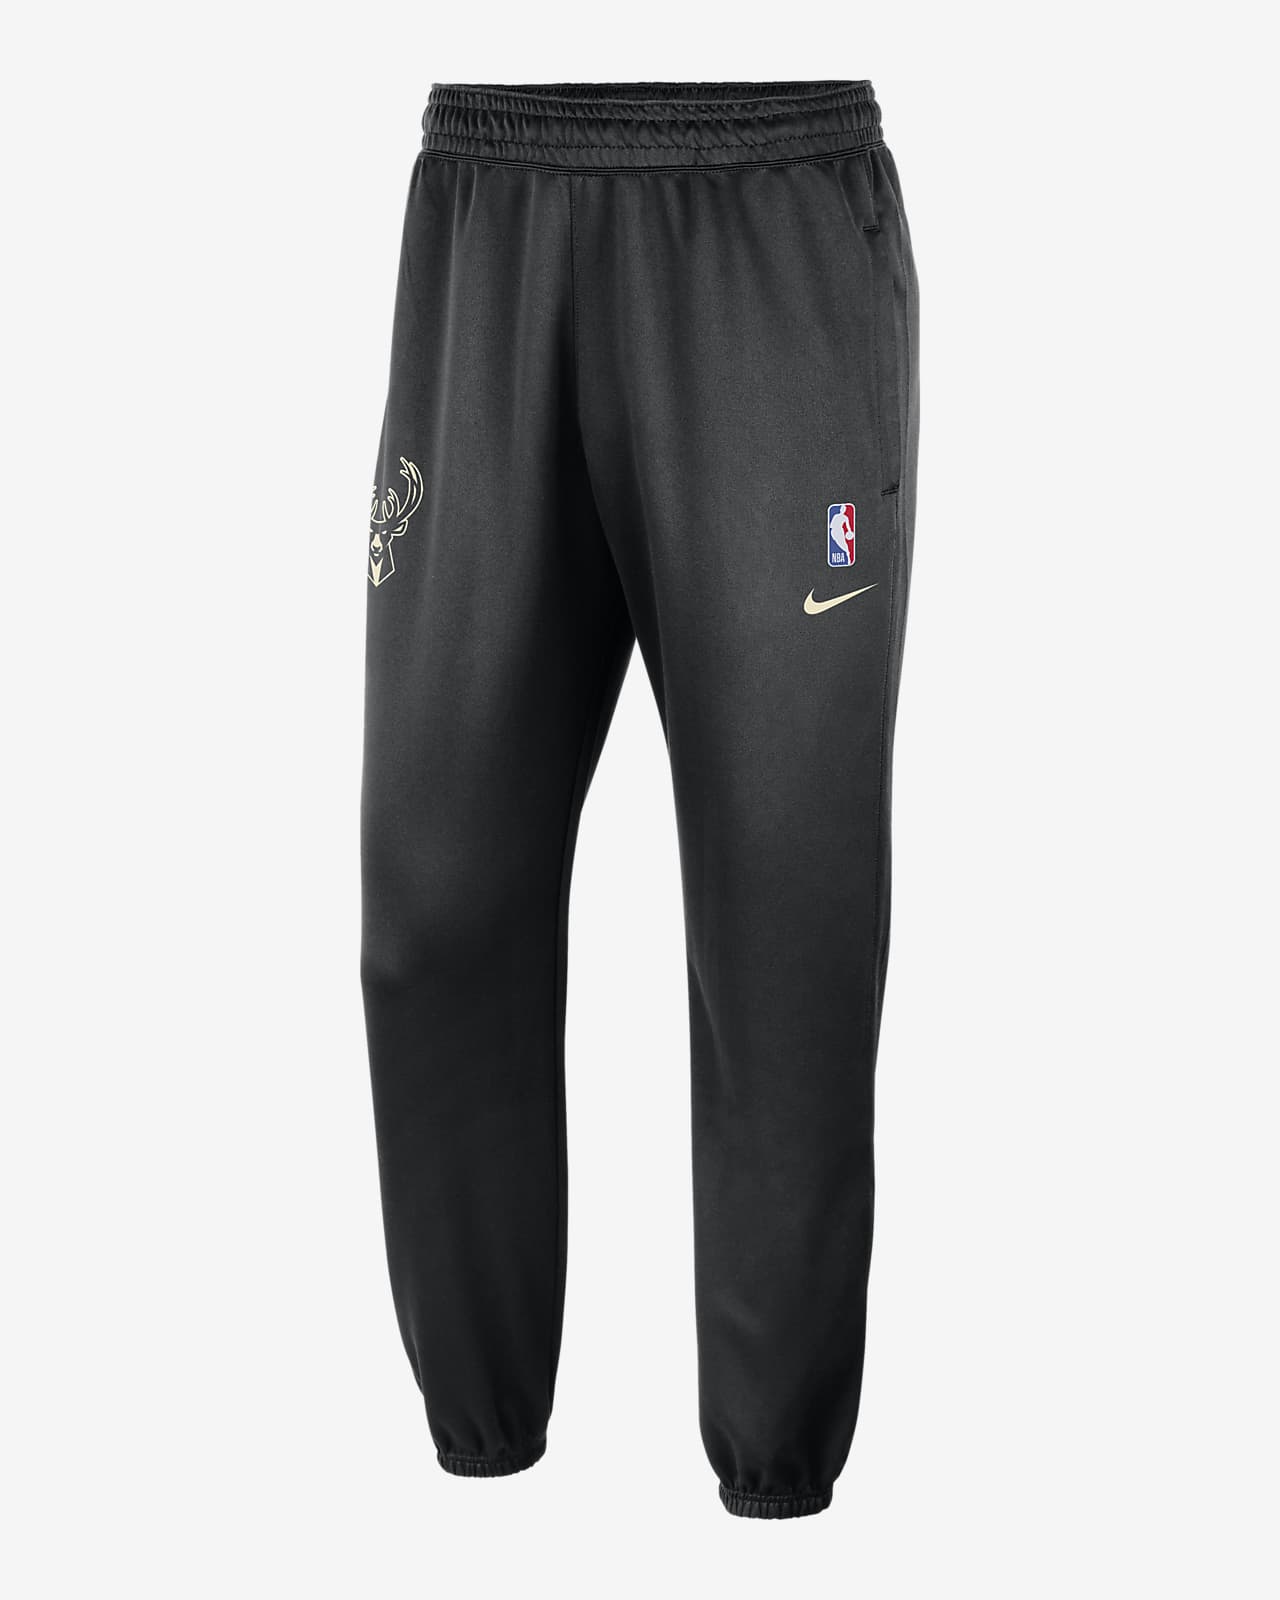 Pantalones Nike Dri-FIT de la NBA para hombre Milwaukee Bucks Spotlight